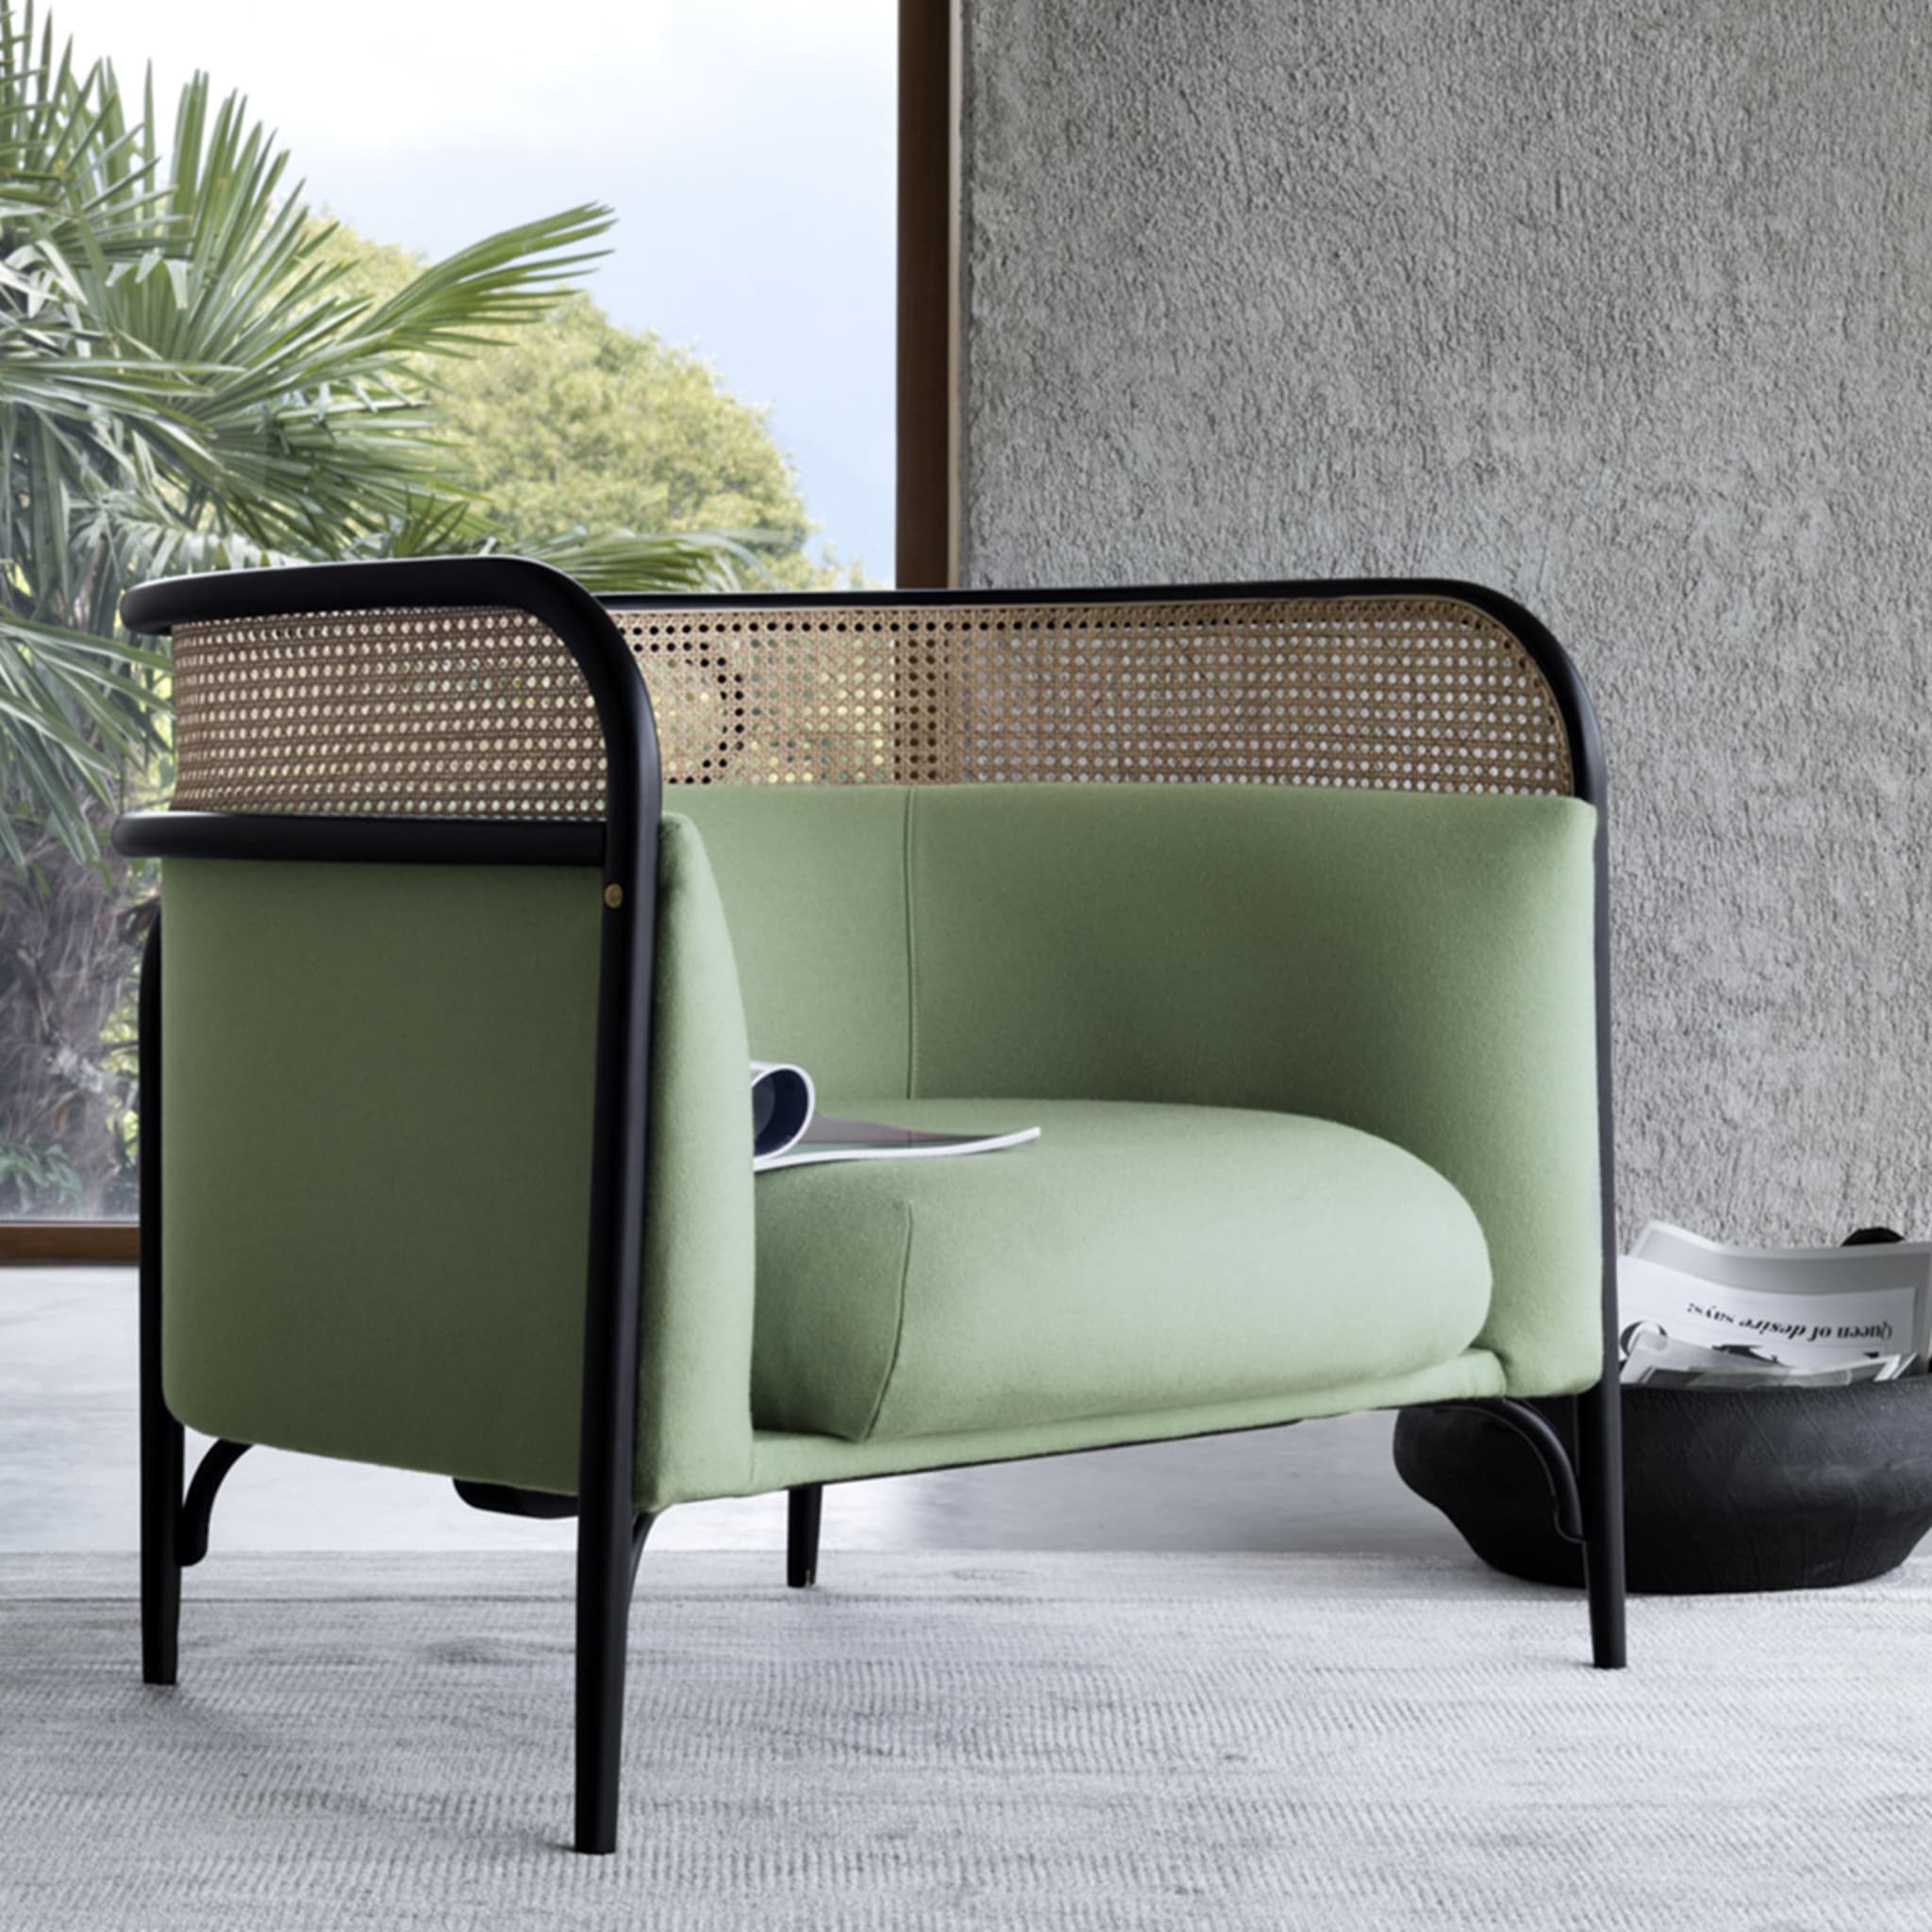 Targa Lounge Chair in Green by GamFratesi - Alternative view 1